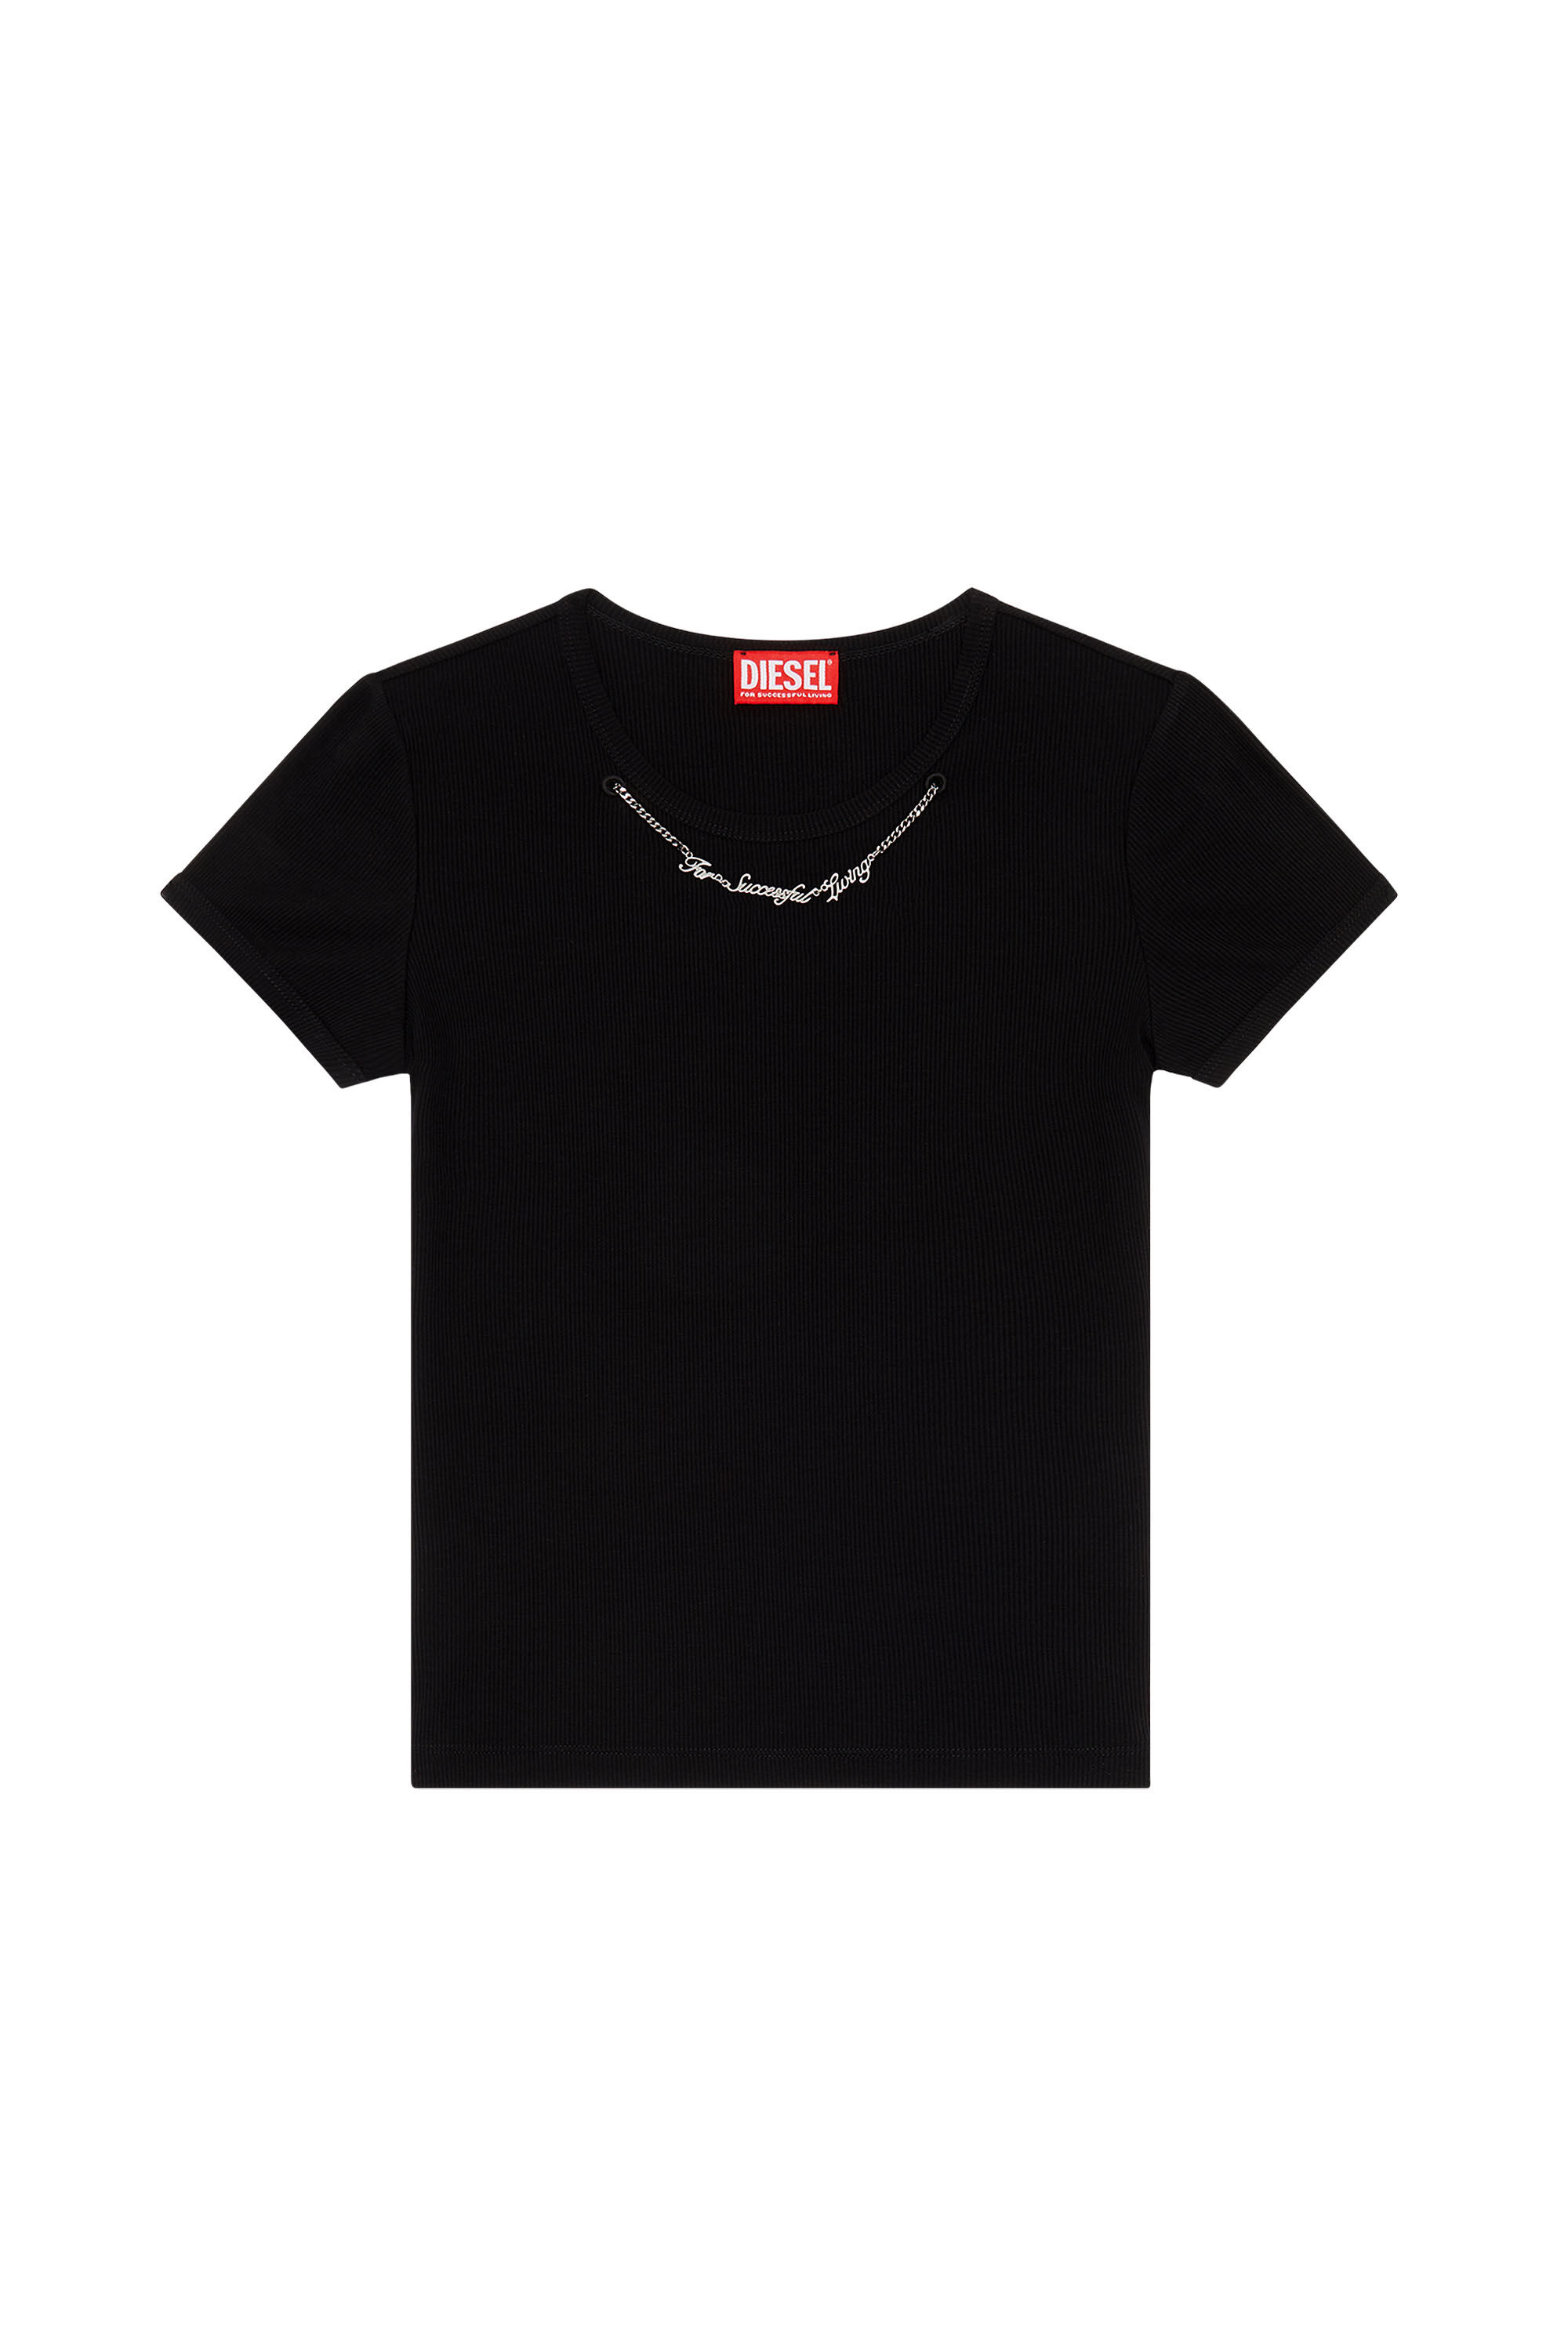 Diesel - T-MATIC, Female Tシャツ in ブラック - Image 2